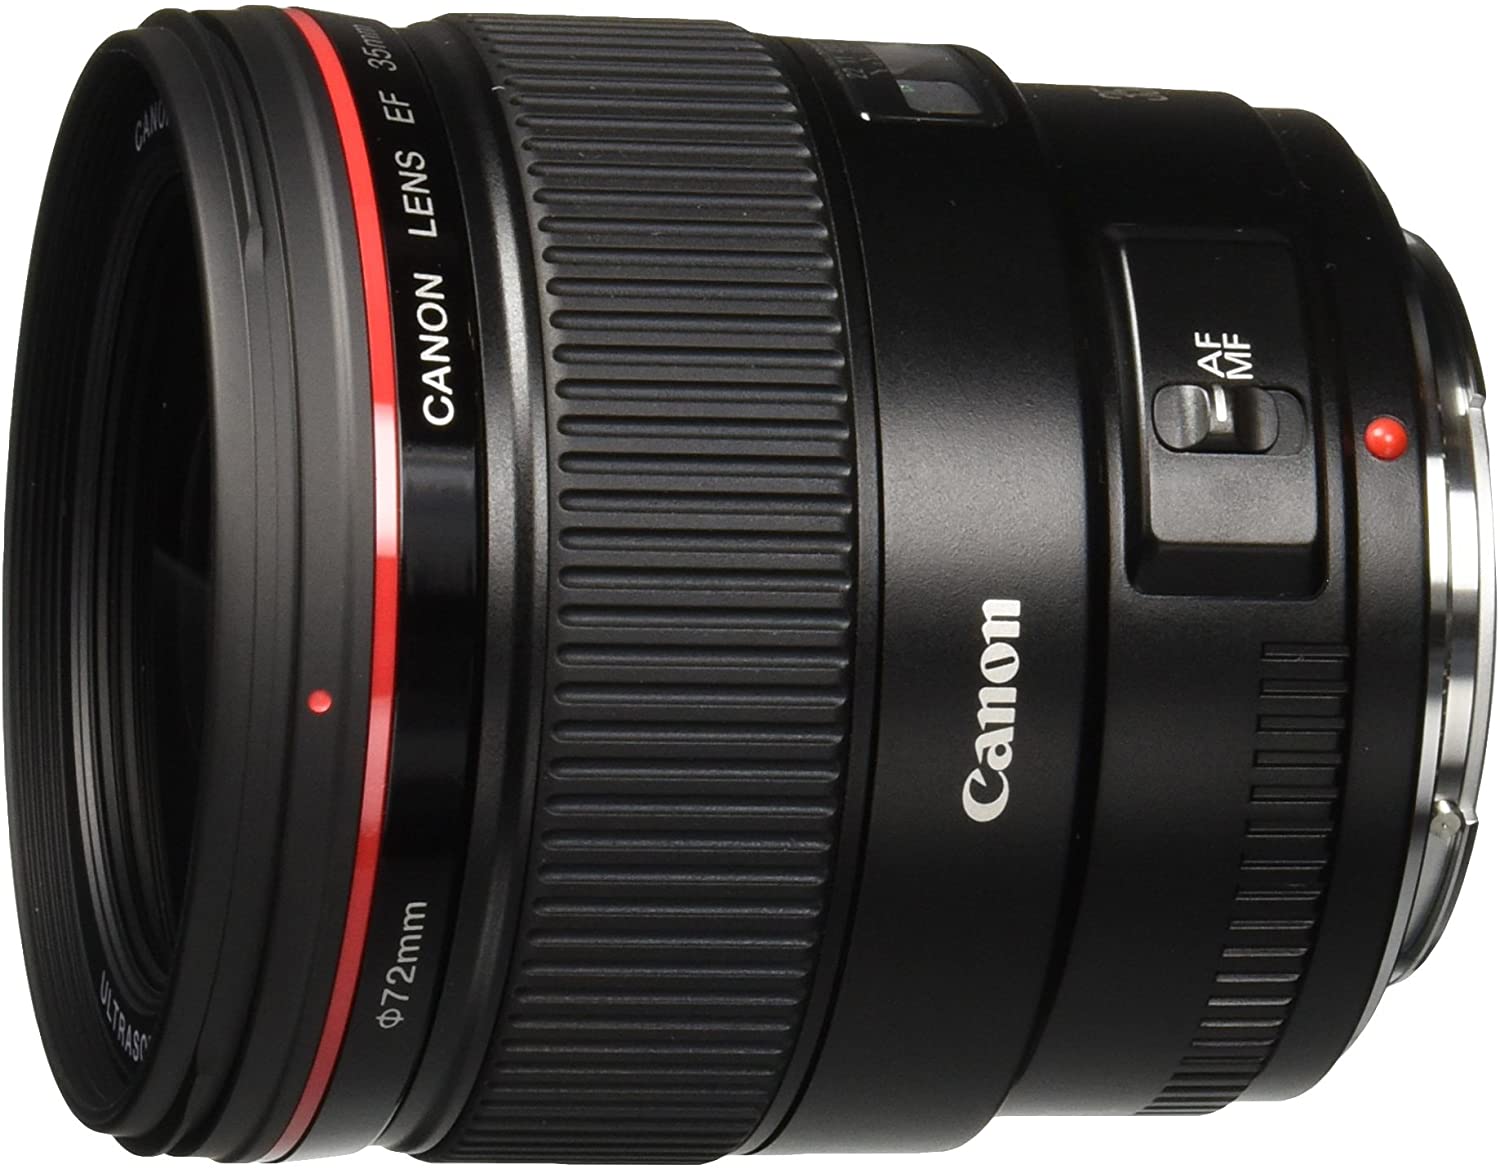 Canon EF 35mm f/1.4L USM Wide Angle Lens for Canon SLR Cameras - White Box (New) (Bulk Packaging)